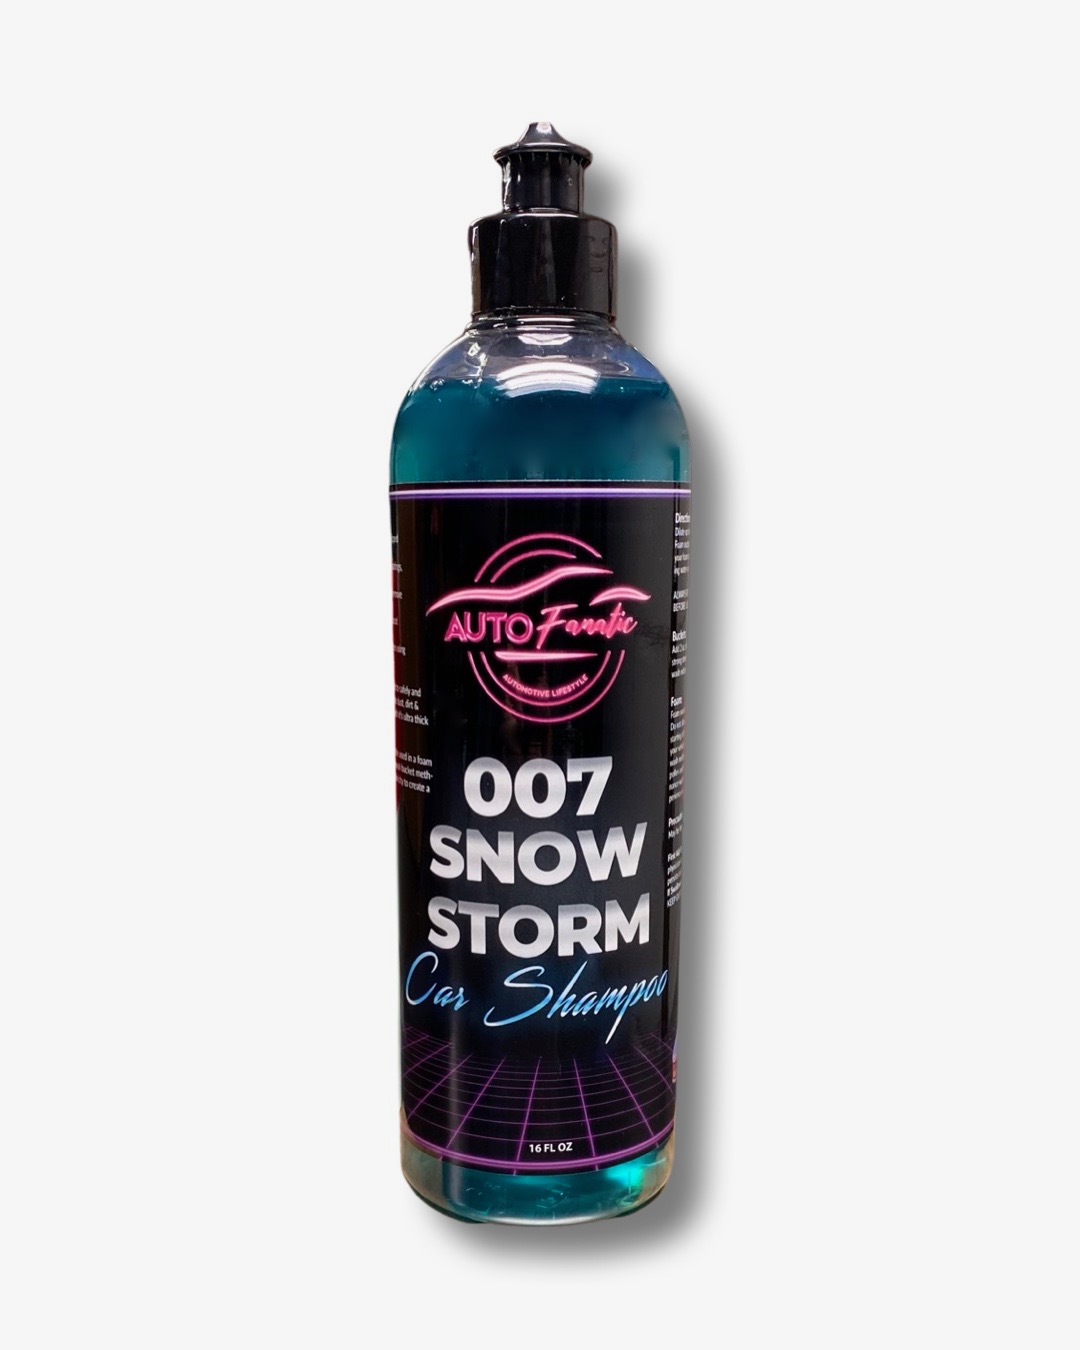 Auto Fanatic 007 Snow Storm Car Shampoo V2.0 MEGA FOAM CASE PACK 20 UNITS  (NEW STOCK 2023) – Auto-Fanatic